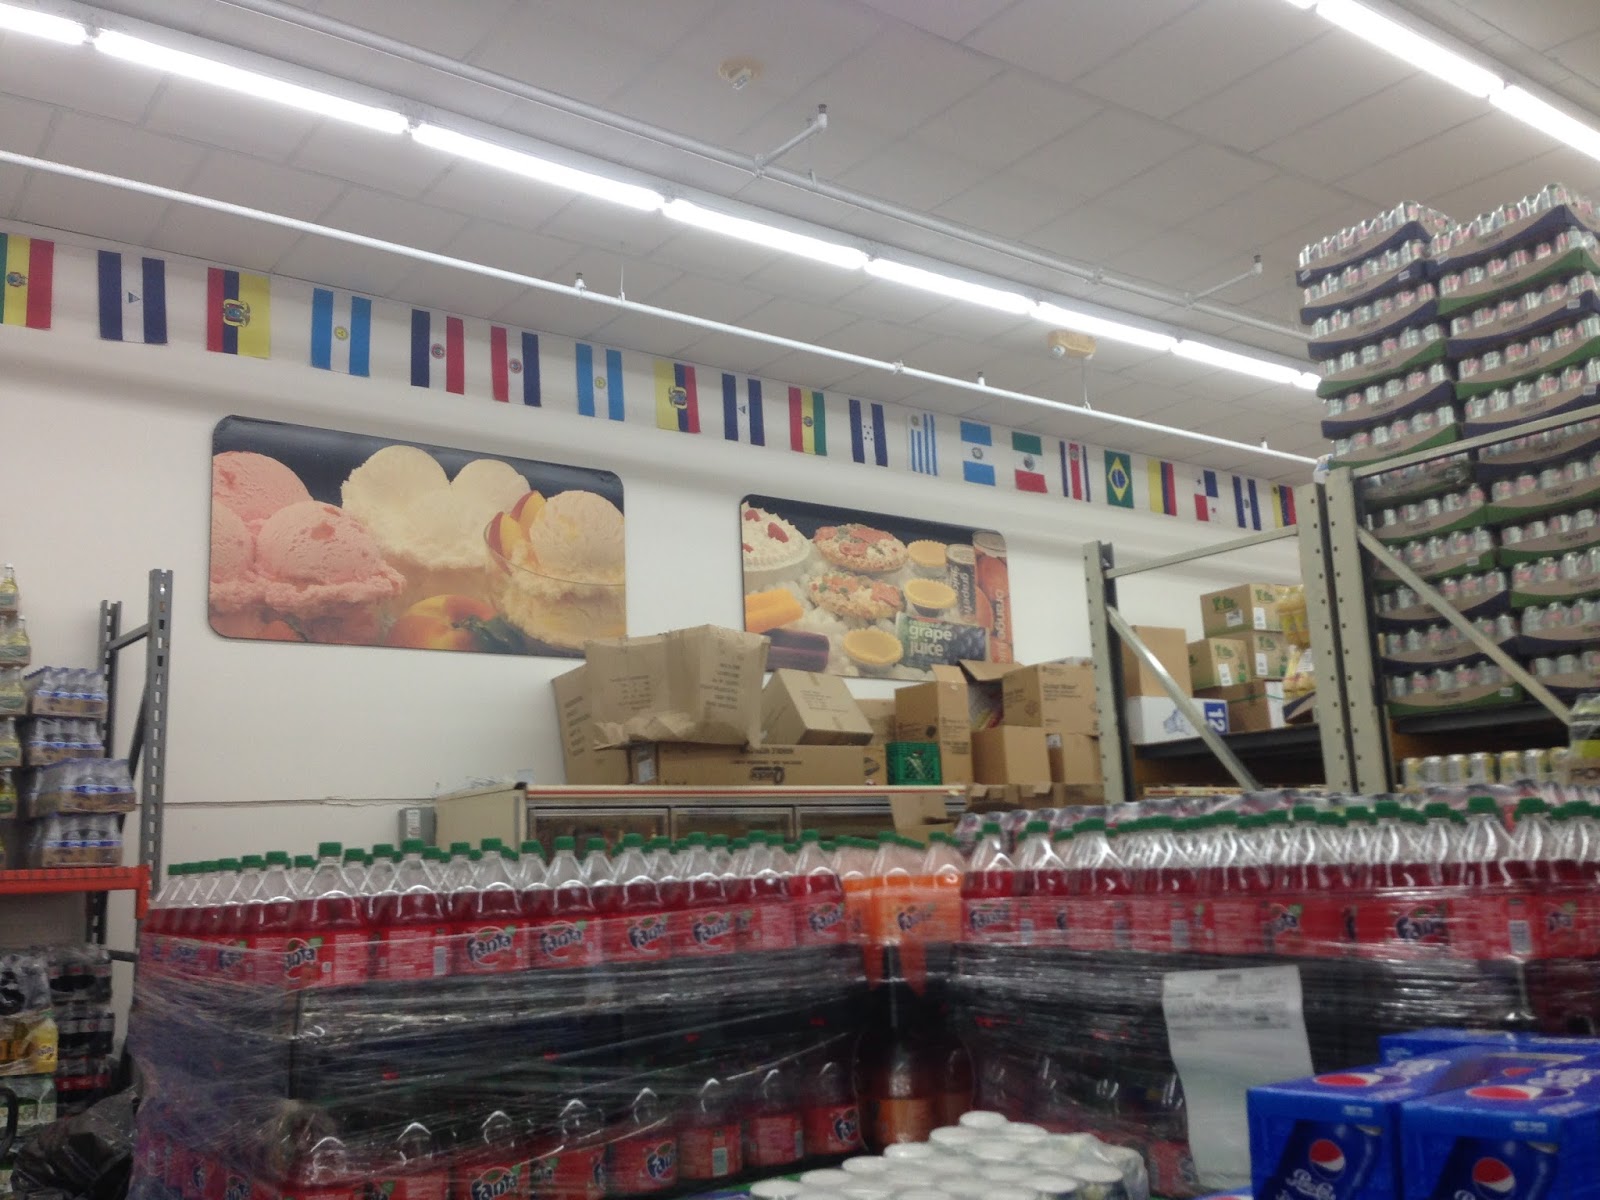 Super Best International Supermarket In Maryland Has It All